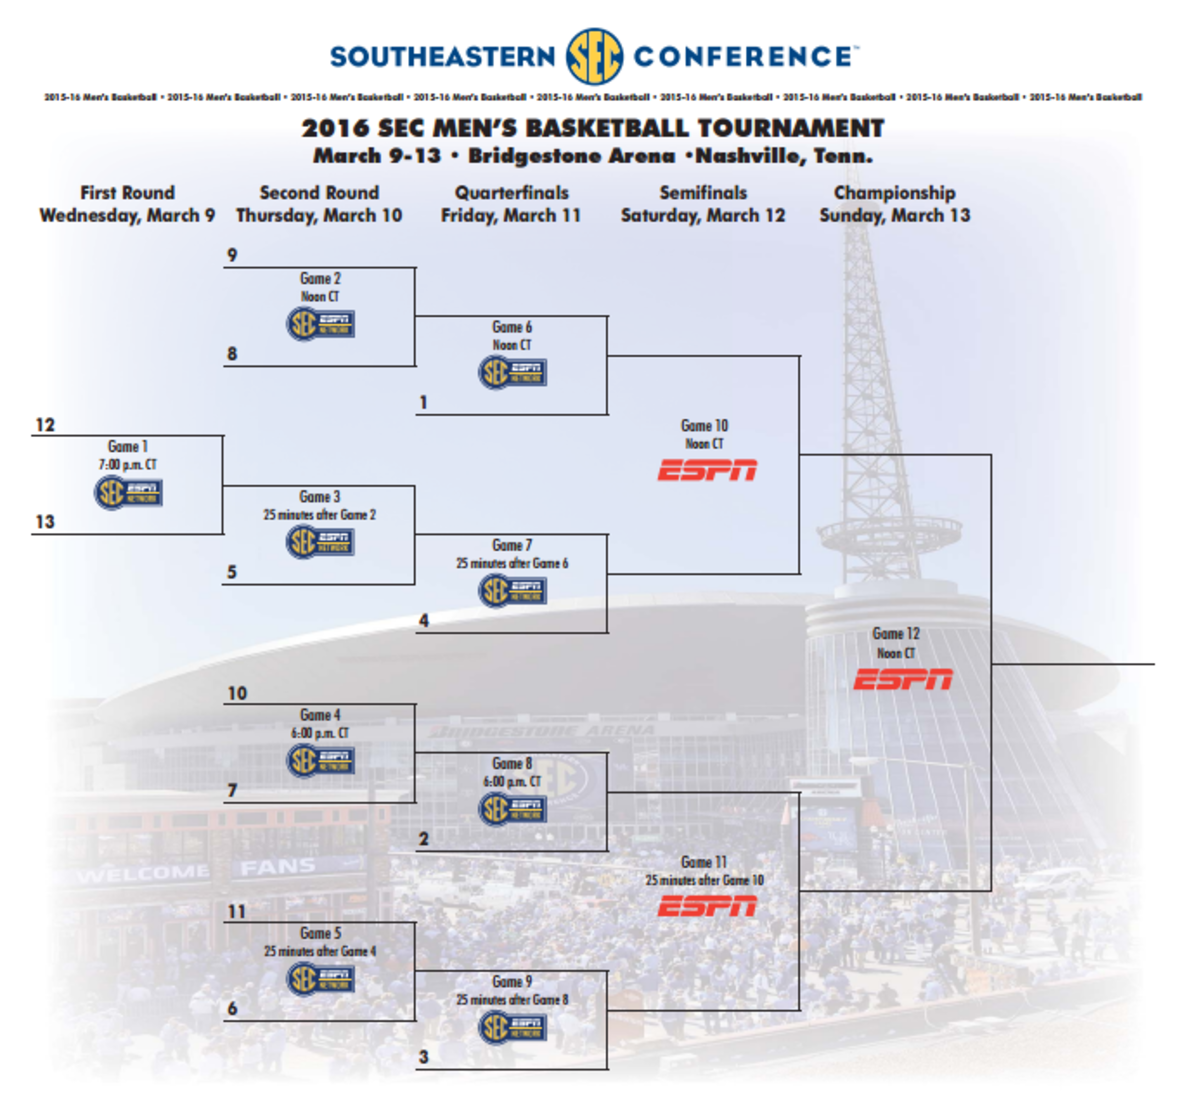 SEC tournament bracket and schedule.